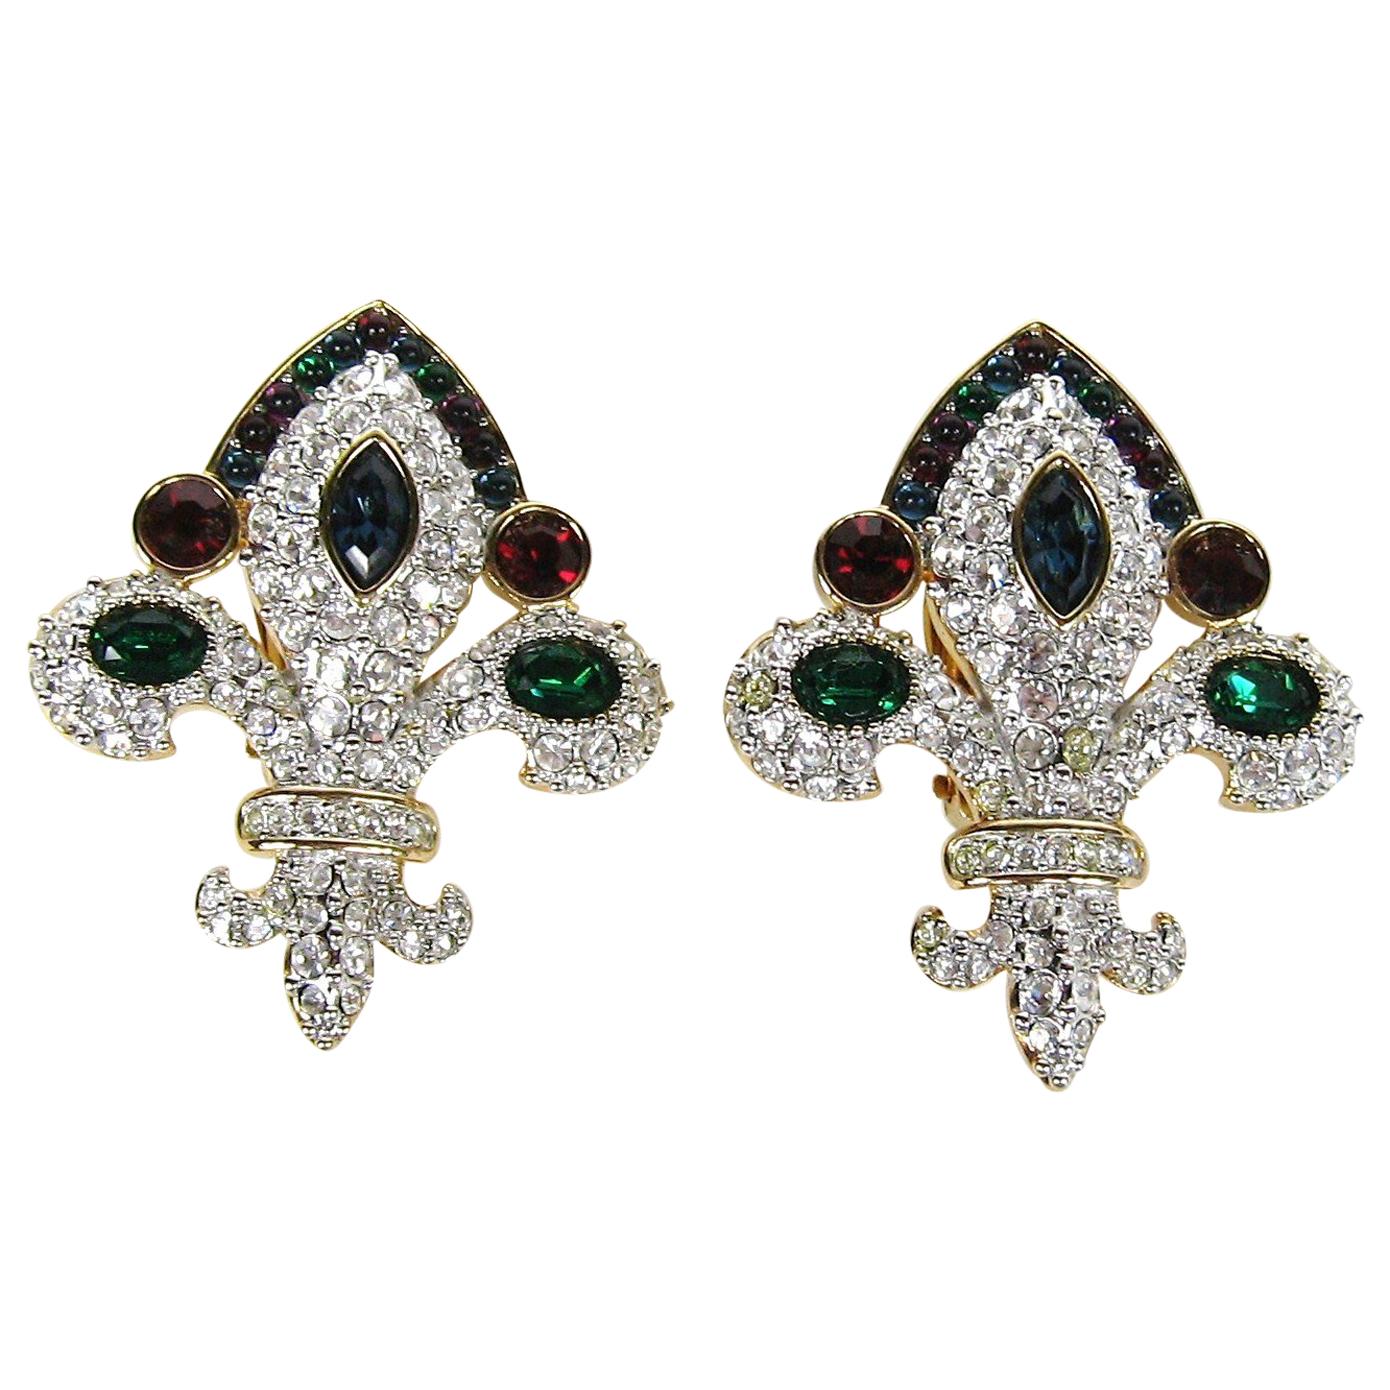 Swarovski jeweler's collection Fleur De Lis Earrings New, Never worn 1990s 